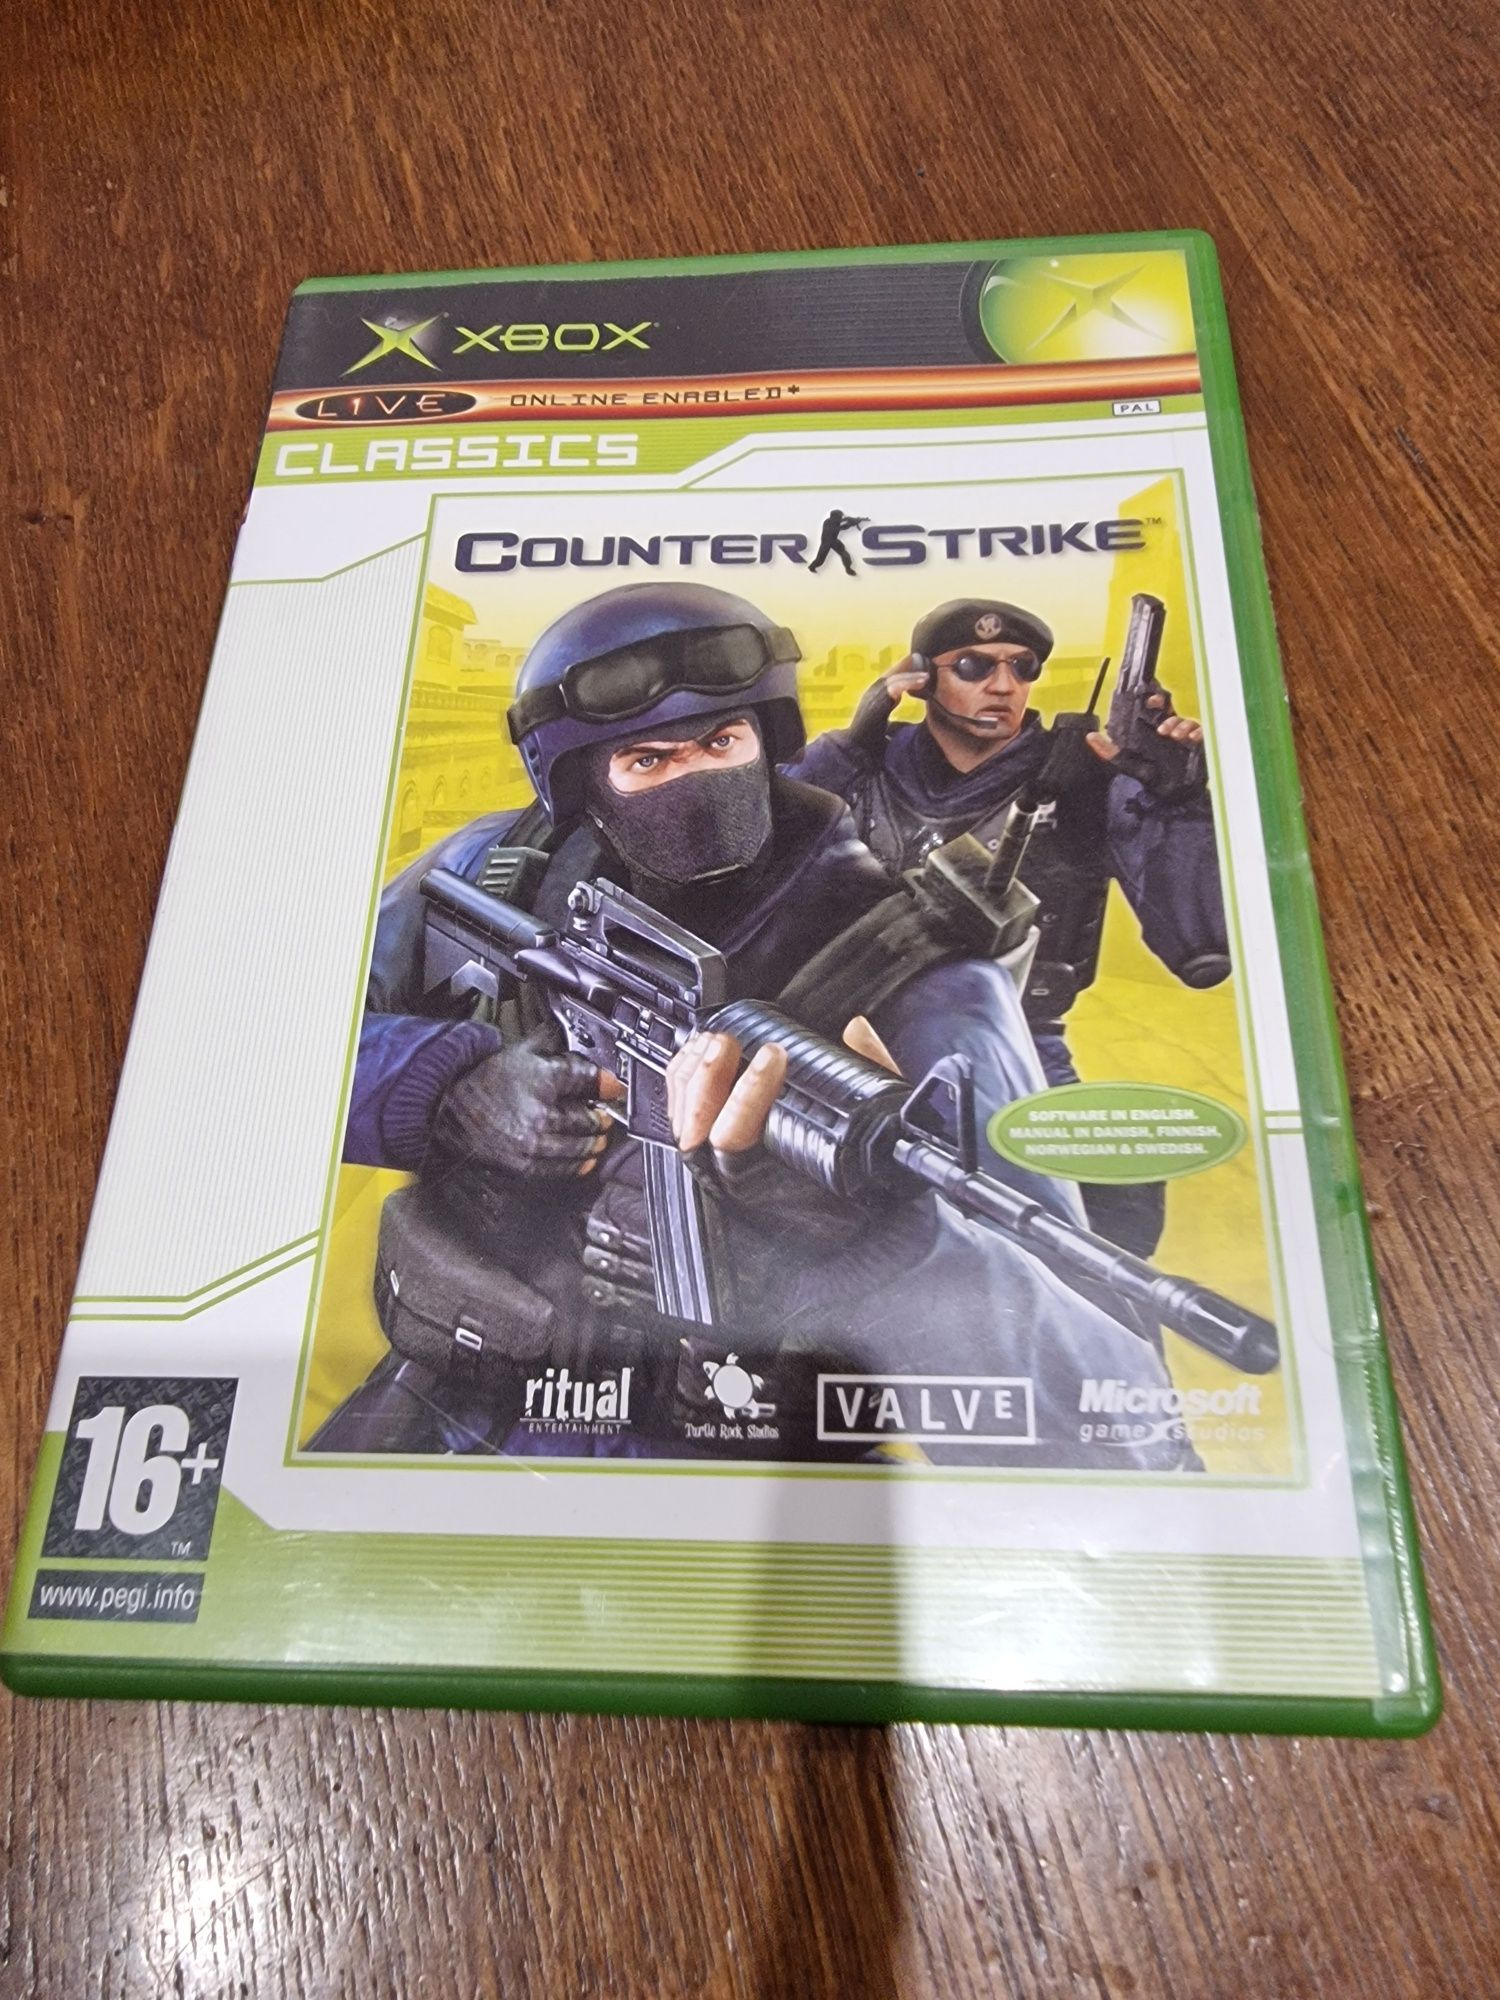 Counter strike Xbox classic